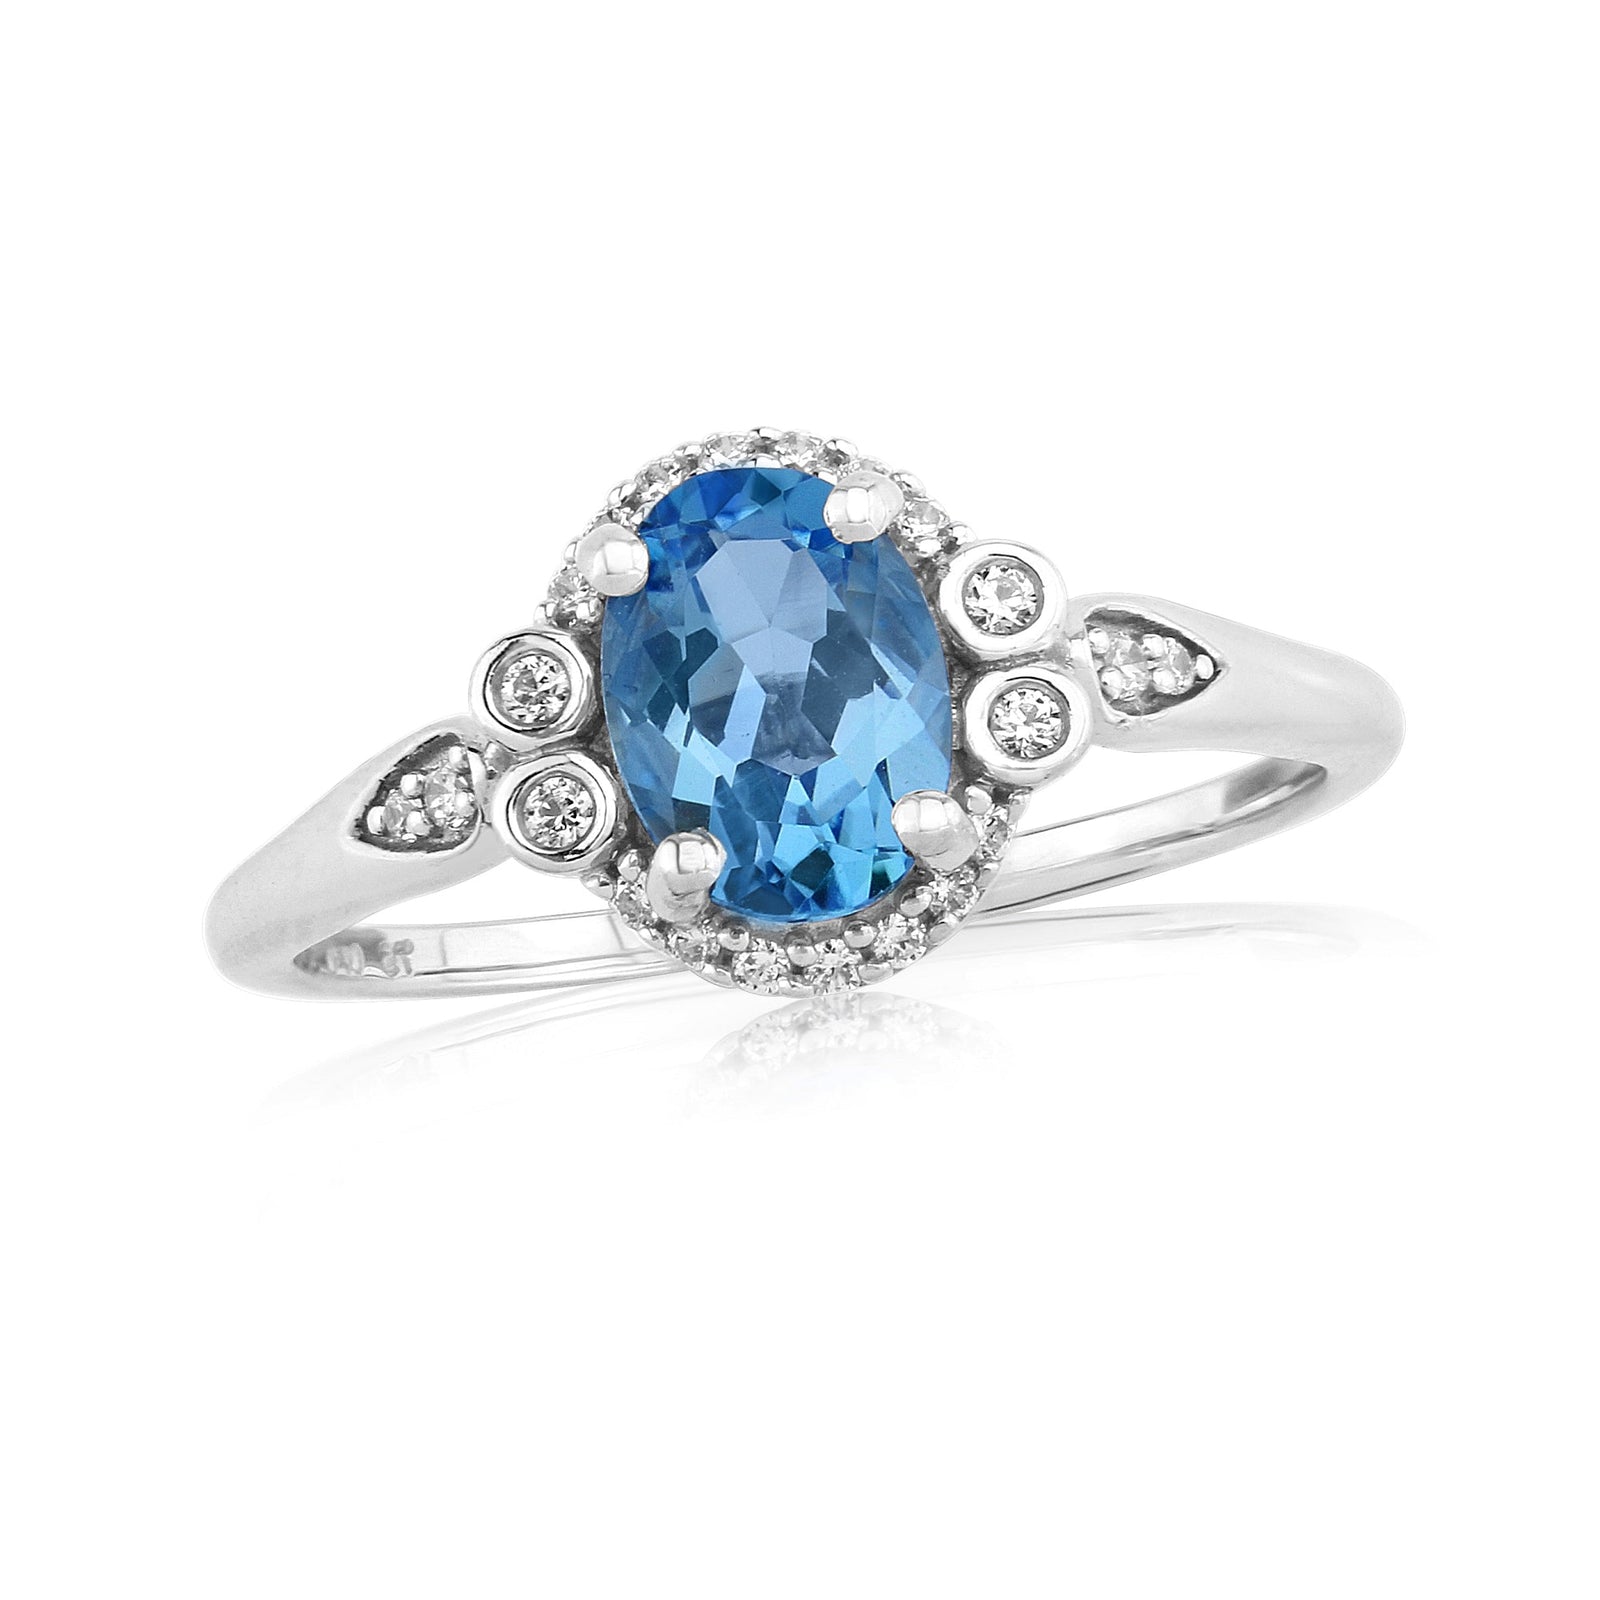 9ct white gold 7x5mm blue topaz & diamond cluster ring 0.10ct